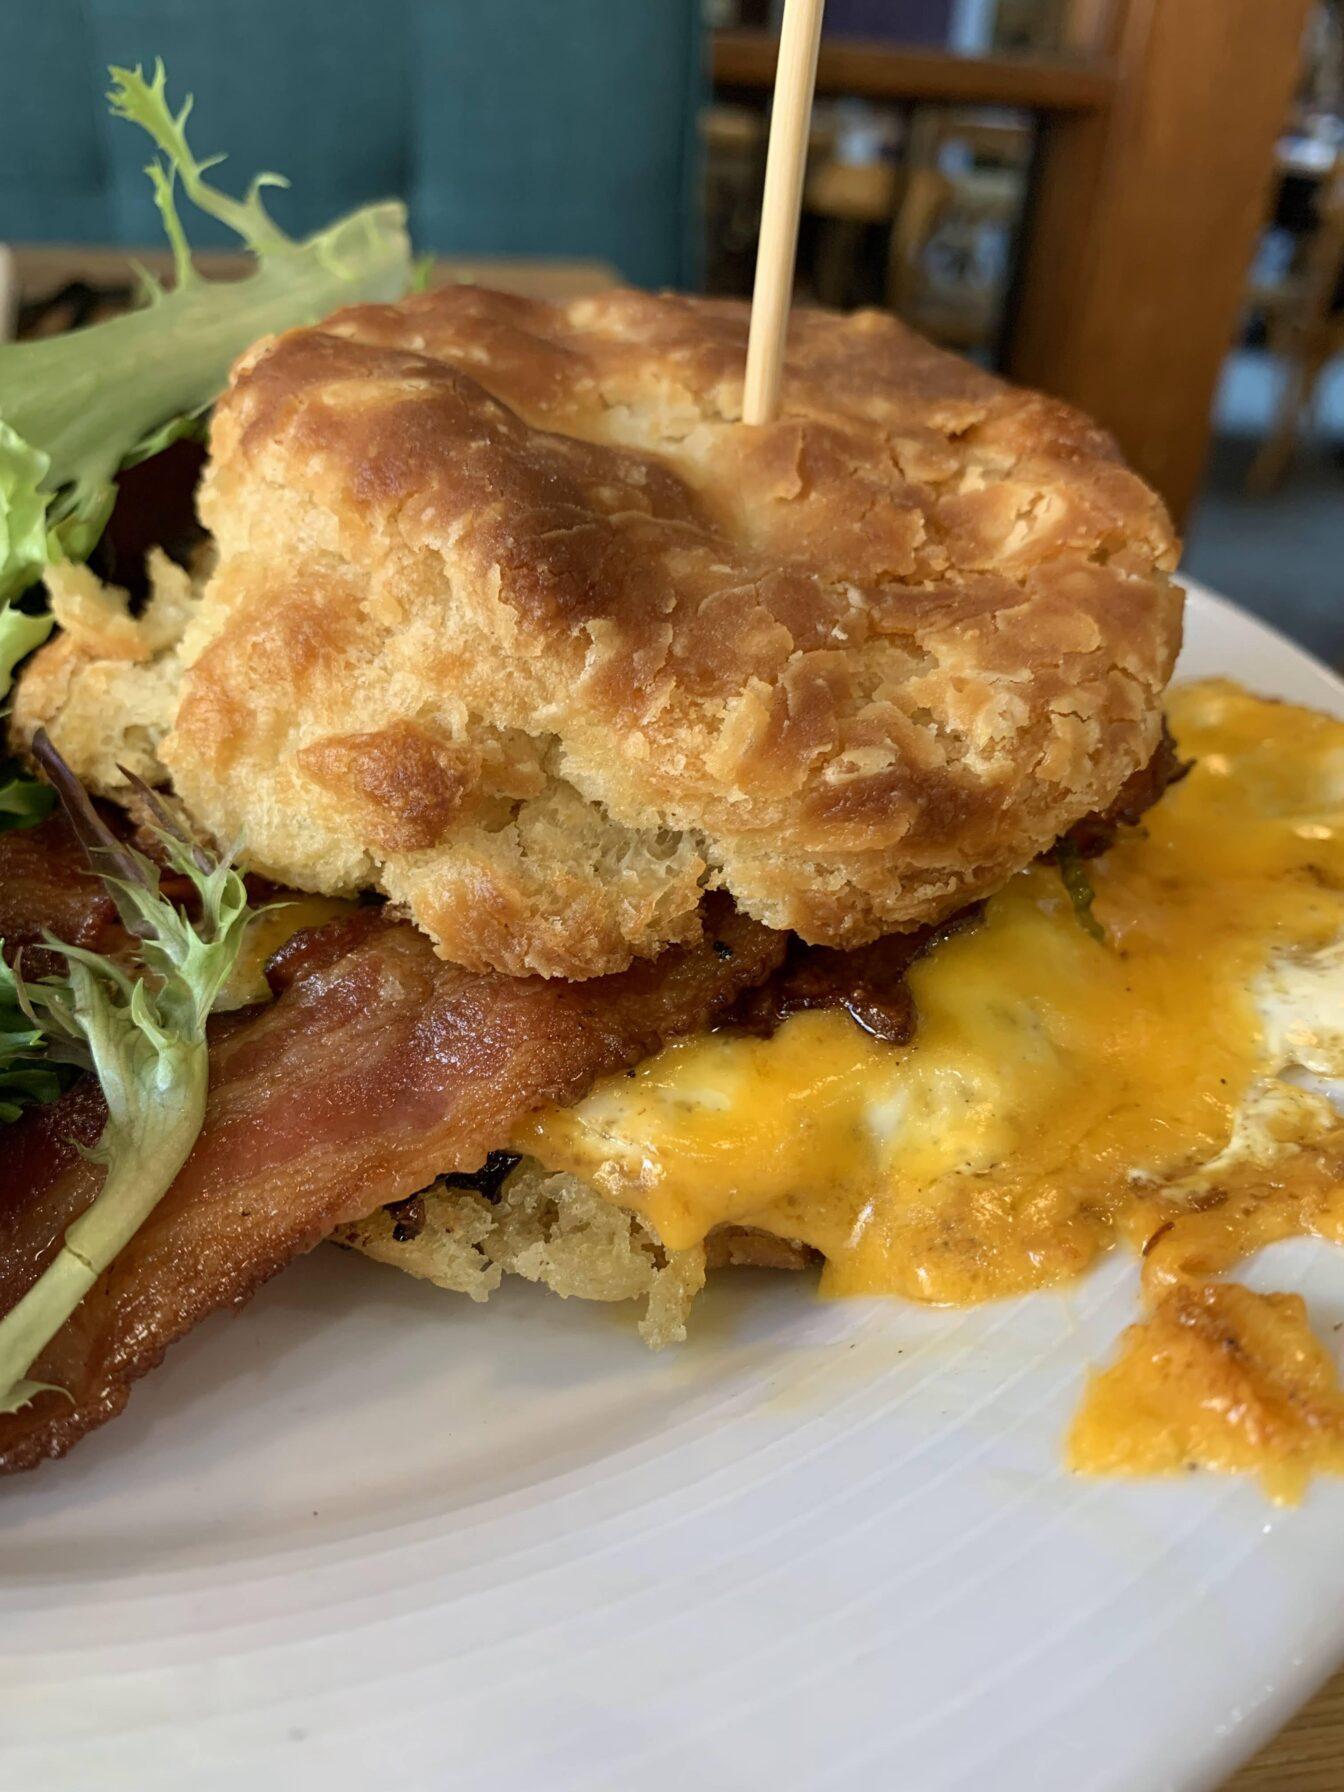 Biggest hits n misses in Madison’s breakfast sandwich scene